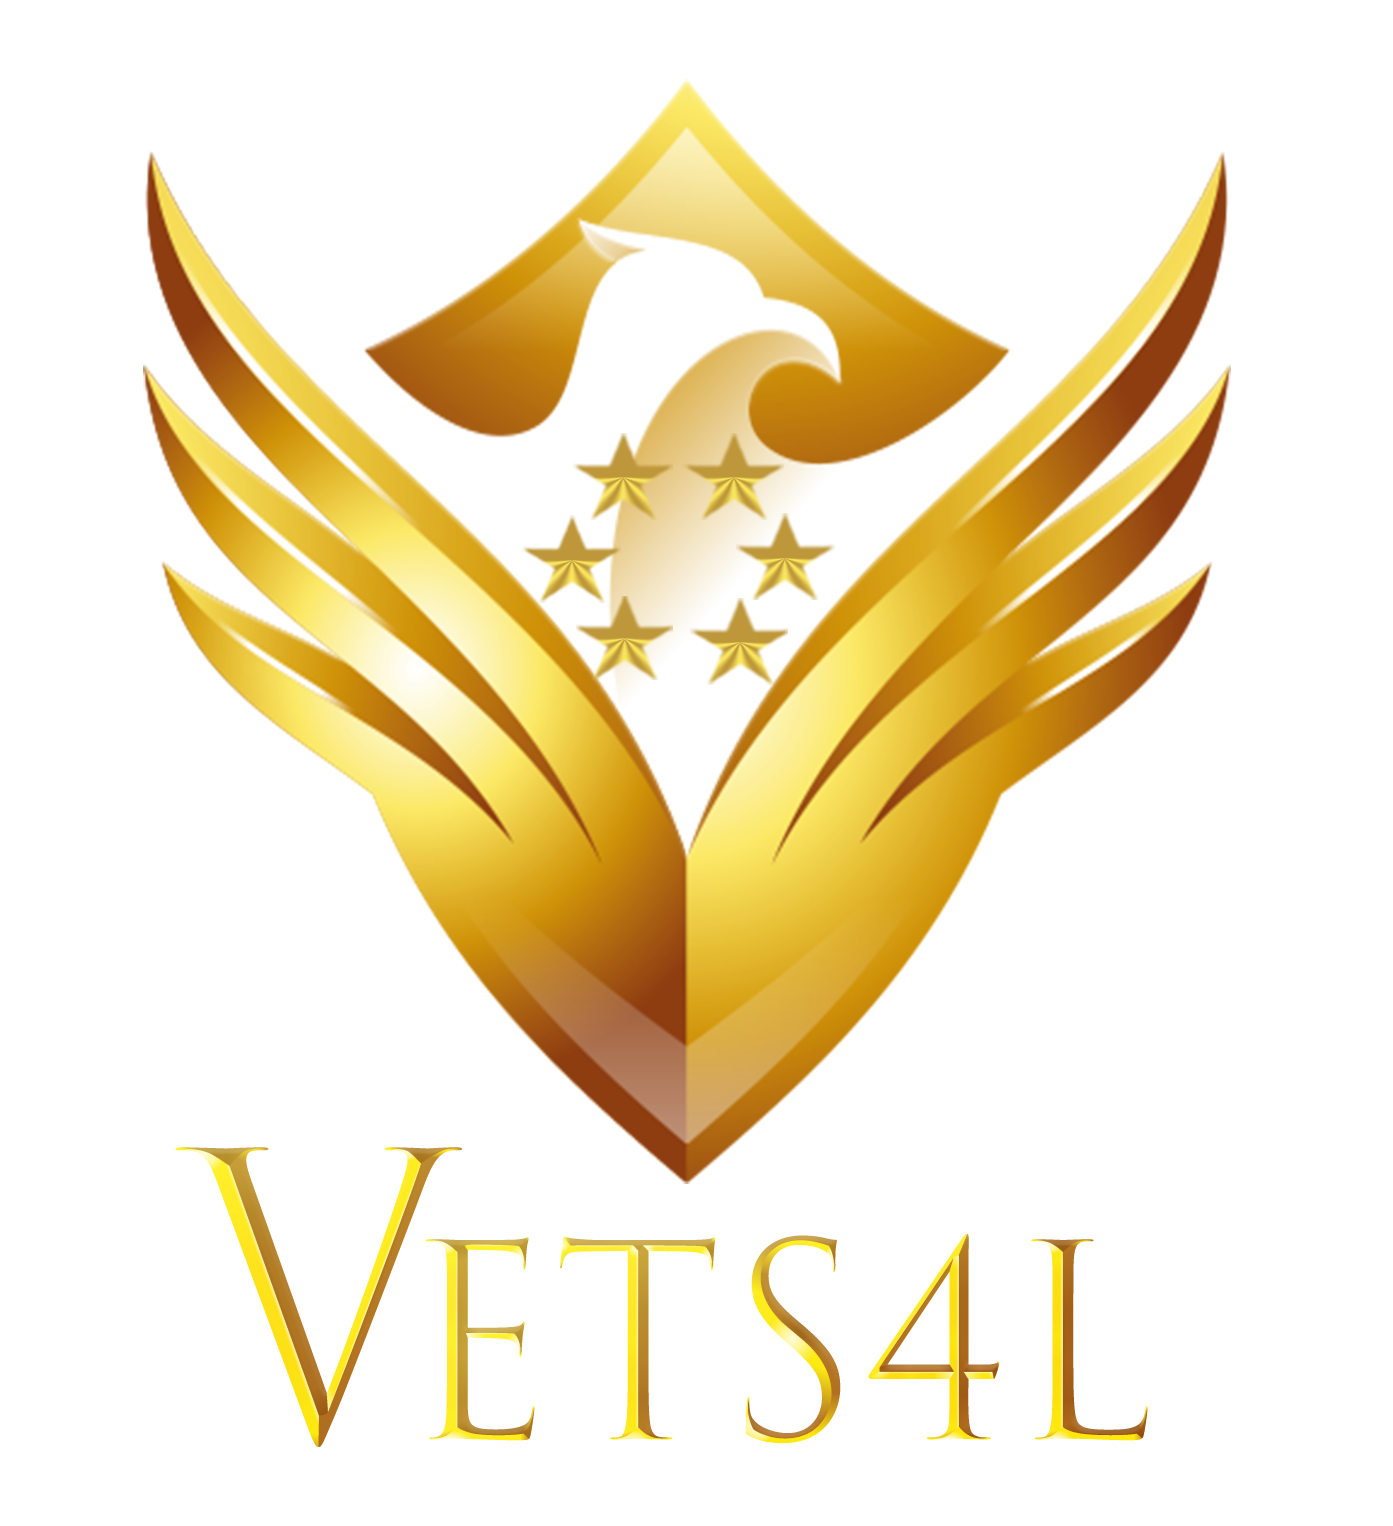 Vets 4 Life logo